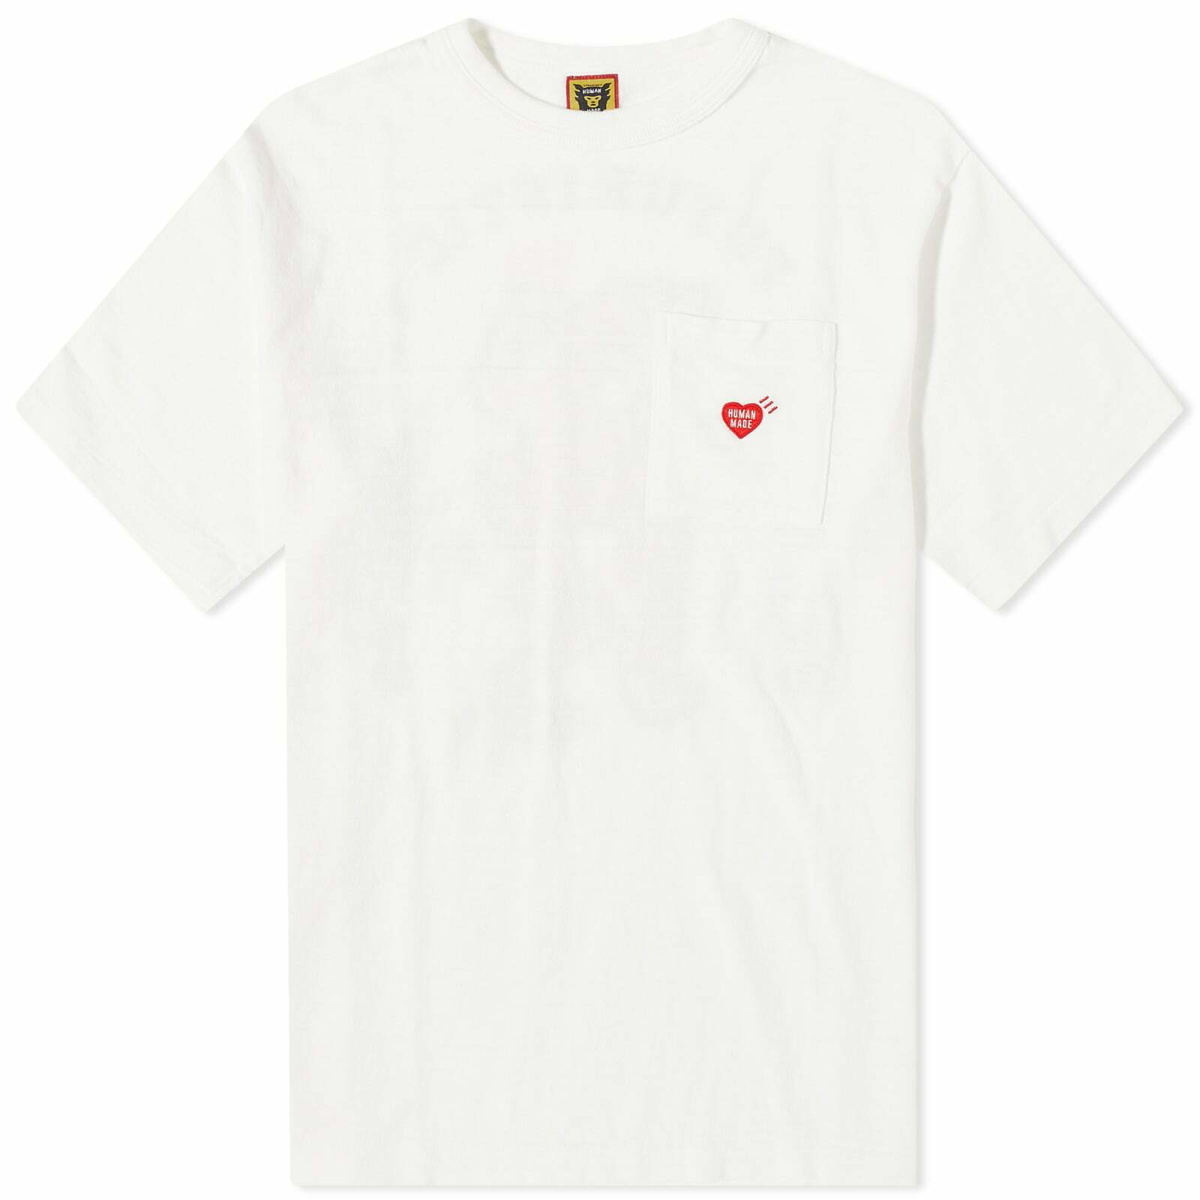 Human Made Ningen-sei Indigo Pocket T-Shirt White